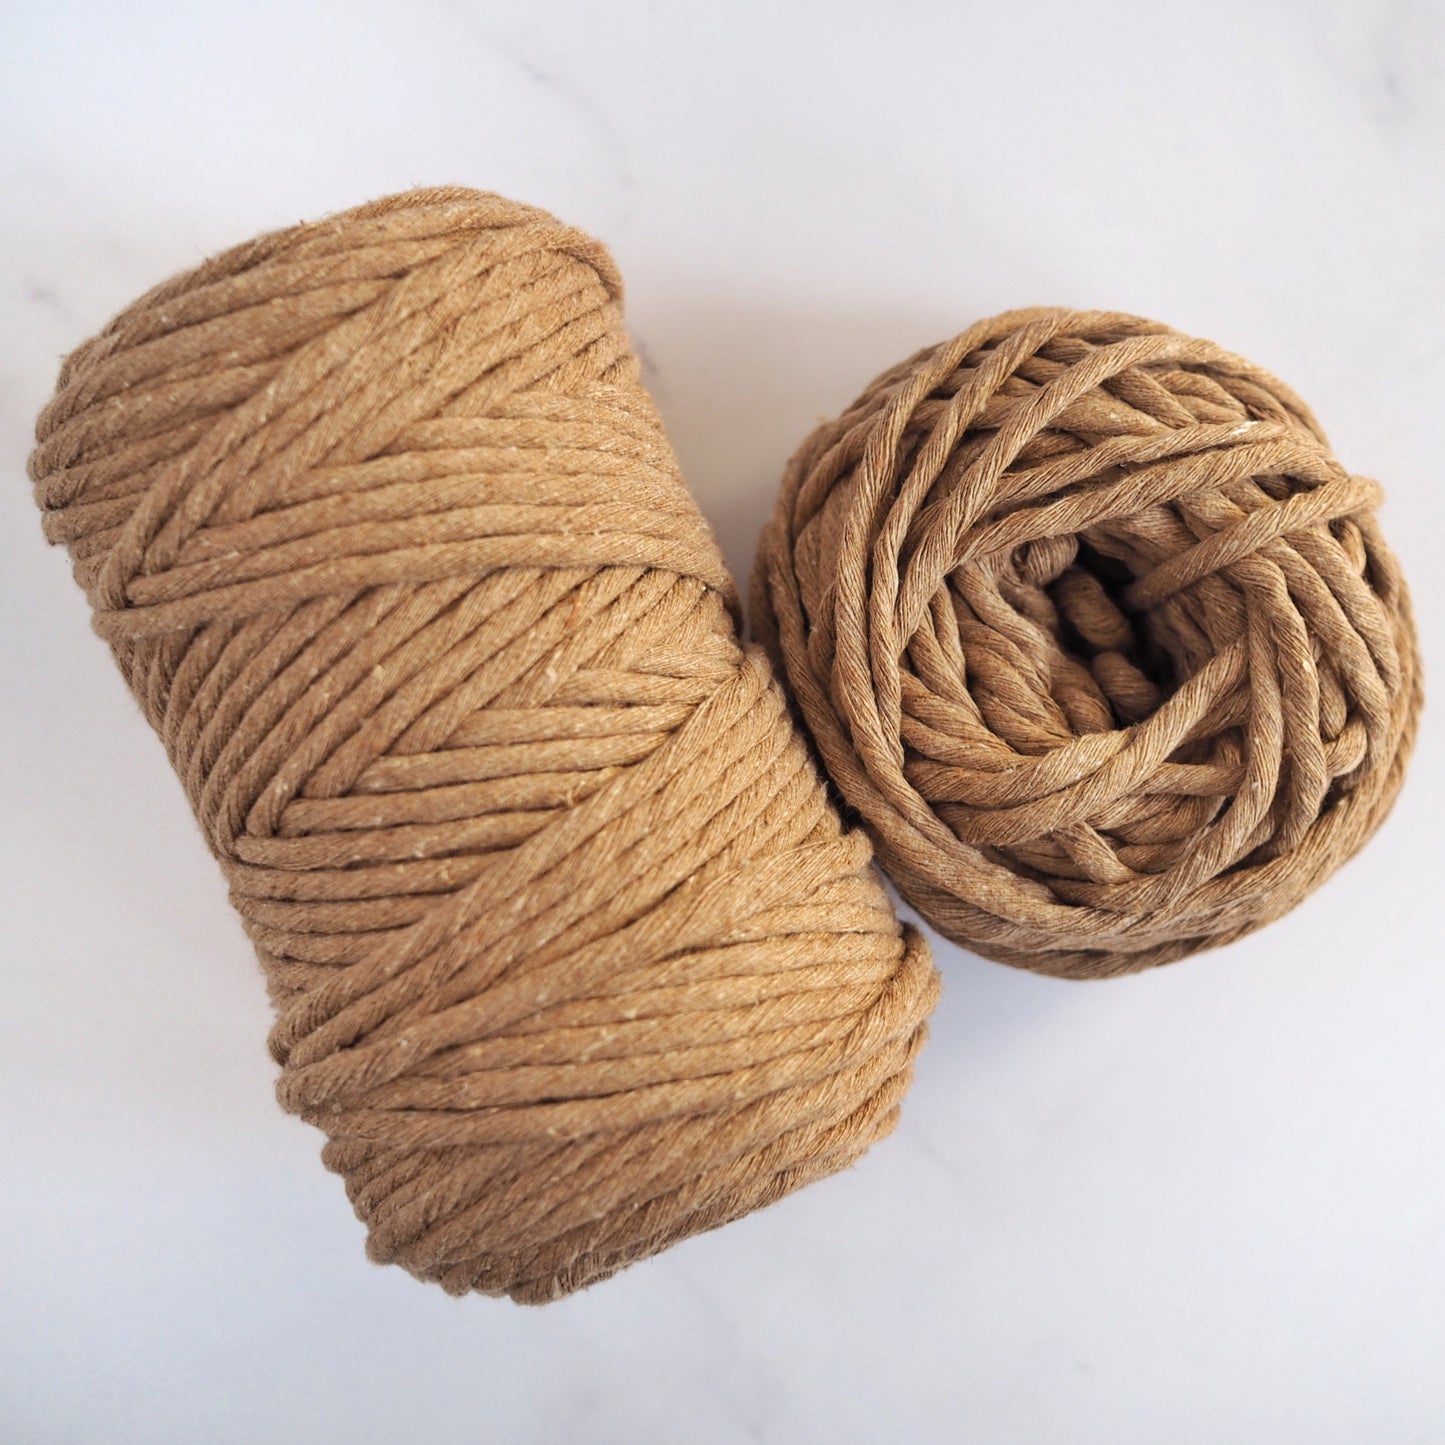 Mocha| 5mm Recycled Cotton String The Joyful Studio